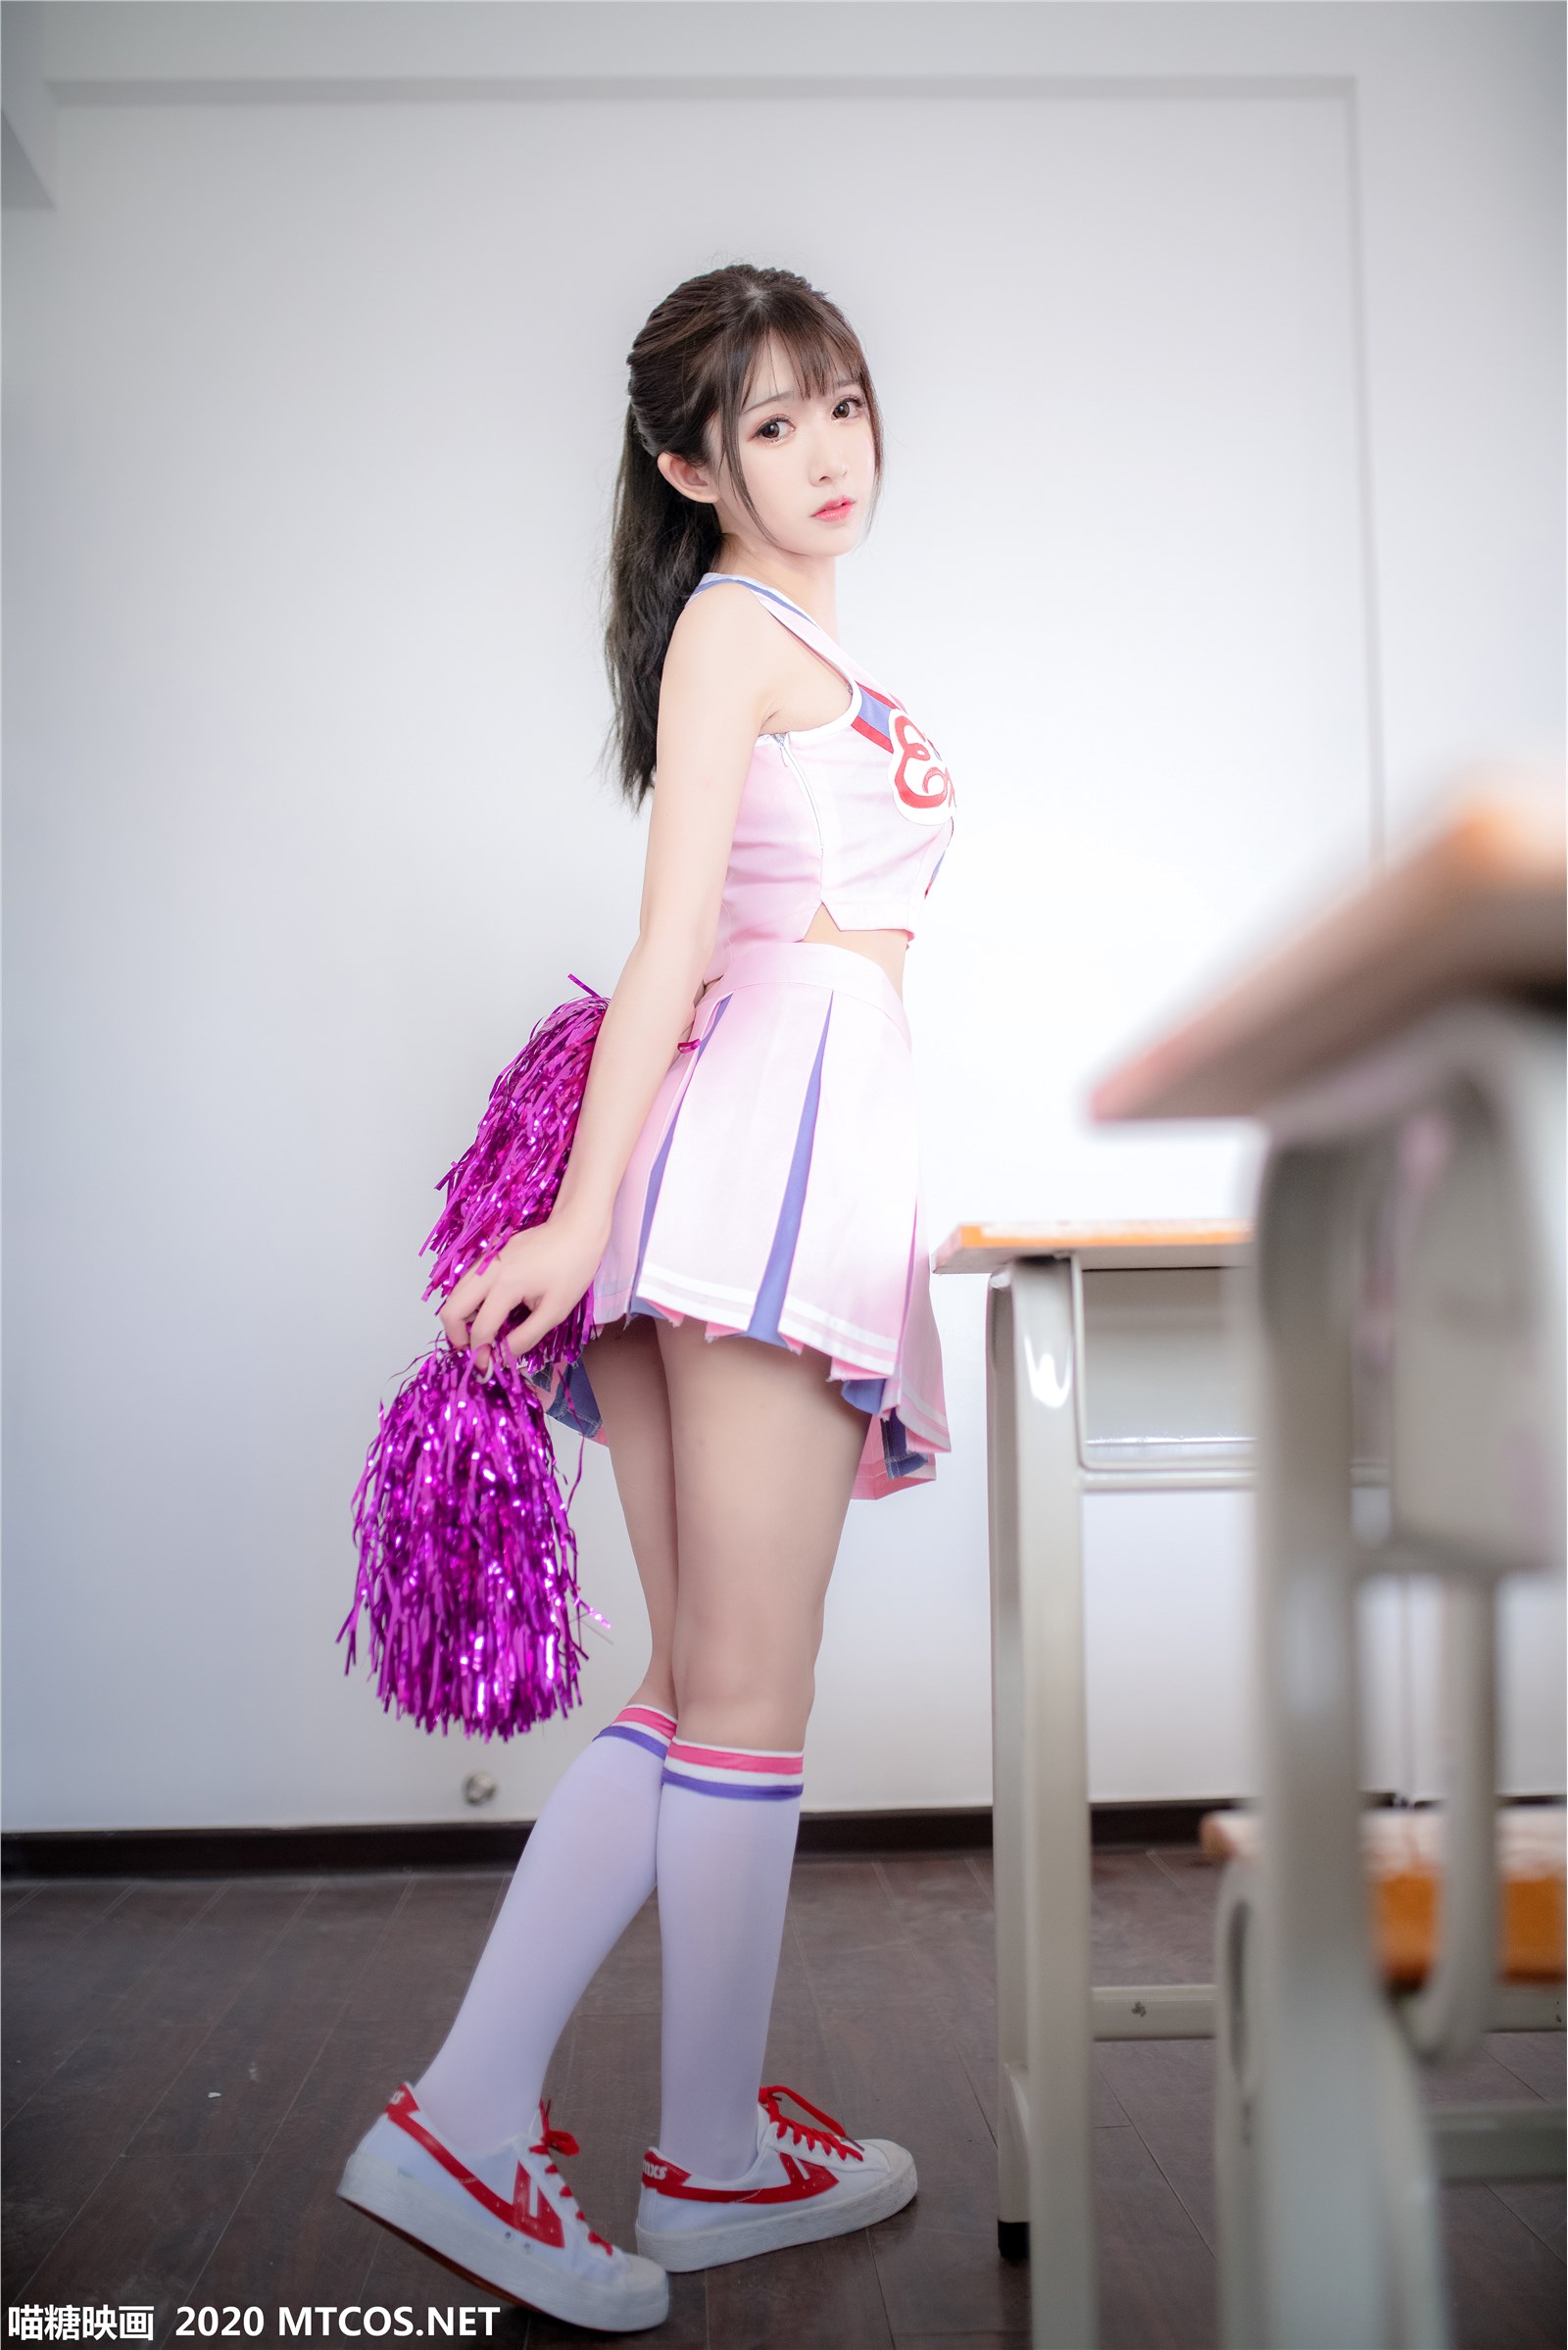 The dress of Cheerleading girl(7)